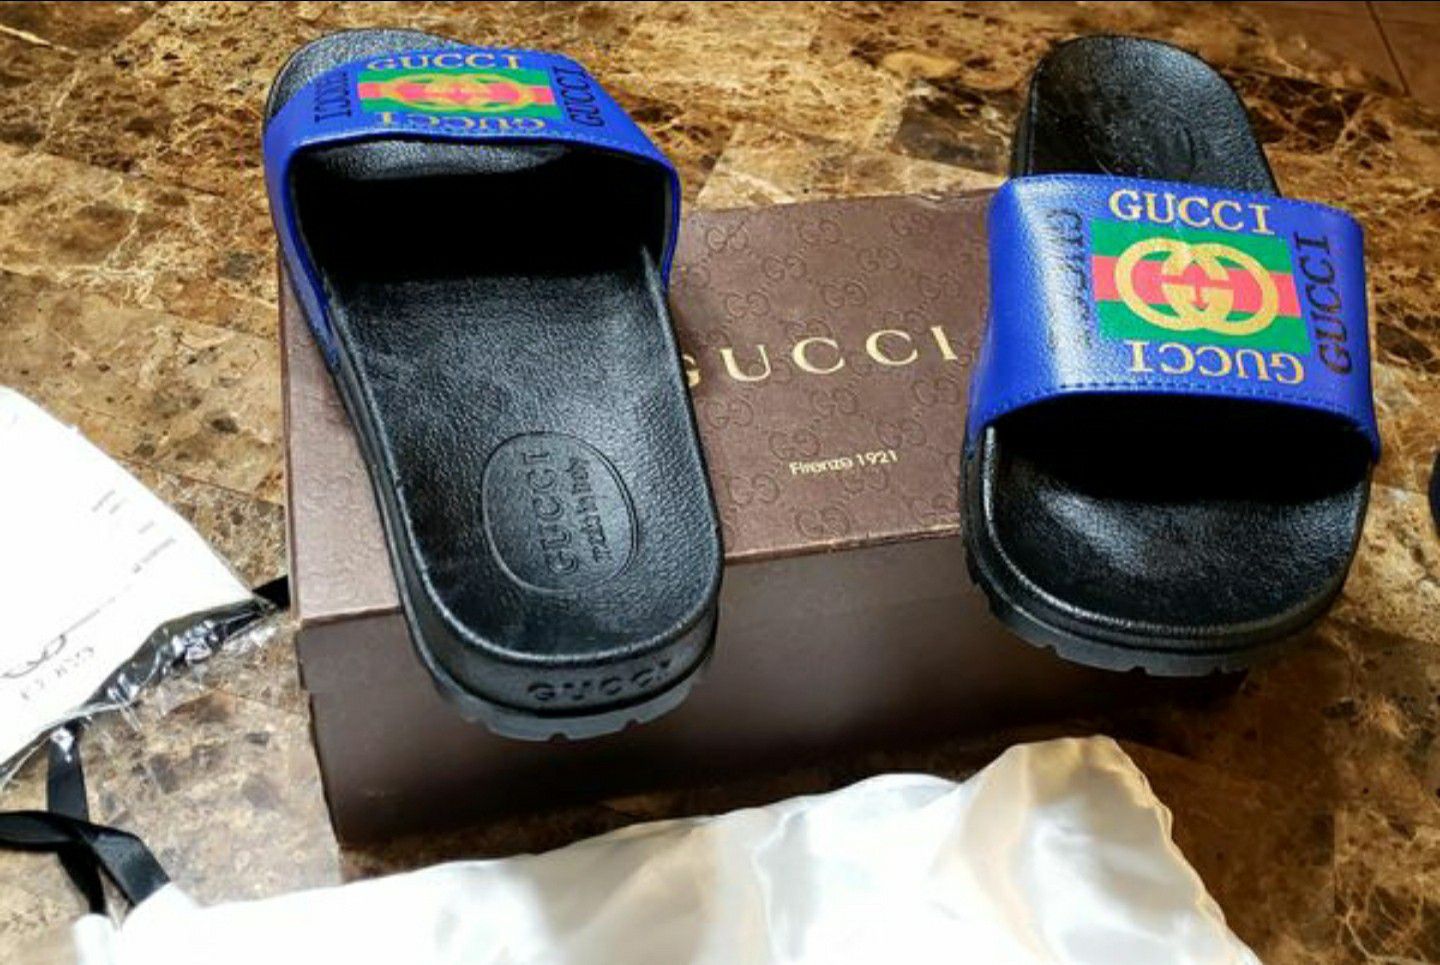 Gucci slides.